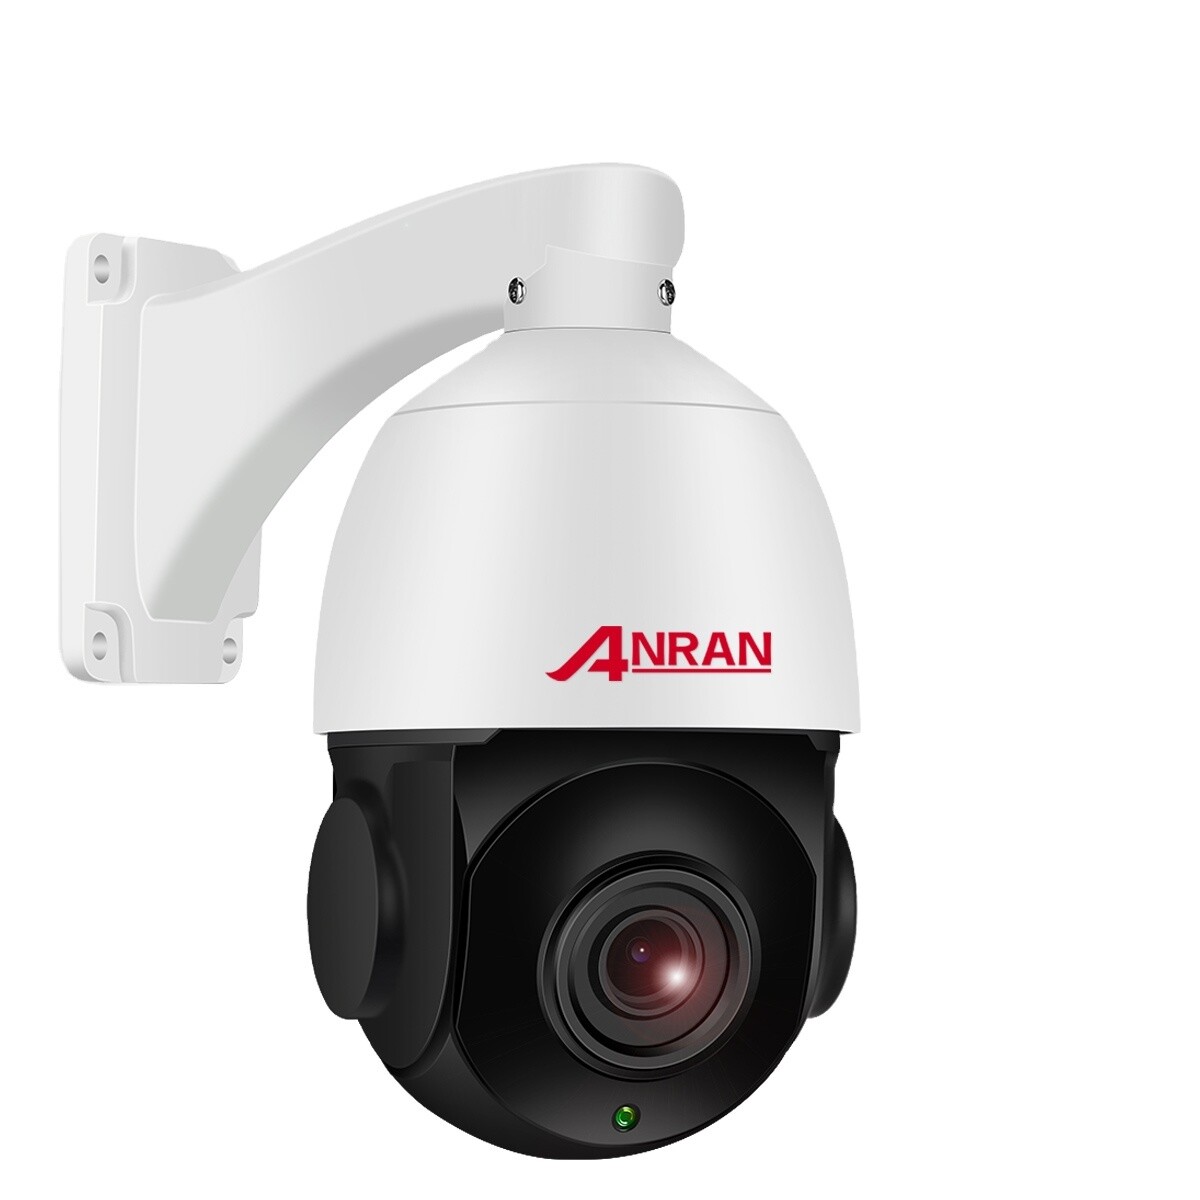 ANRAN 4K 8MP outdoor 30X ZOOM Speed PTZ Security Surveillance IP POE Dome CCTV Camera